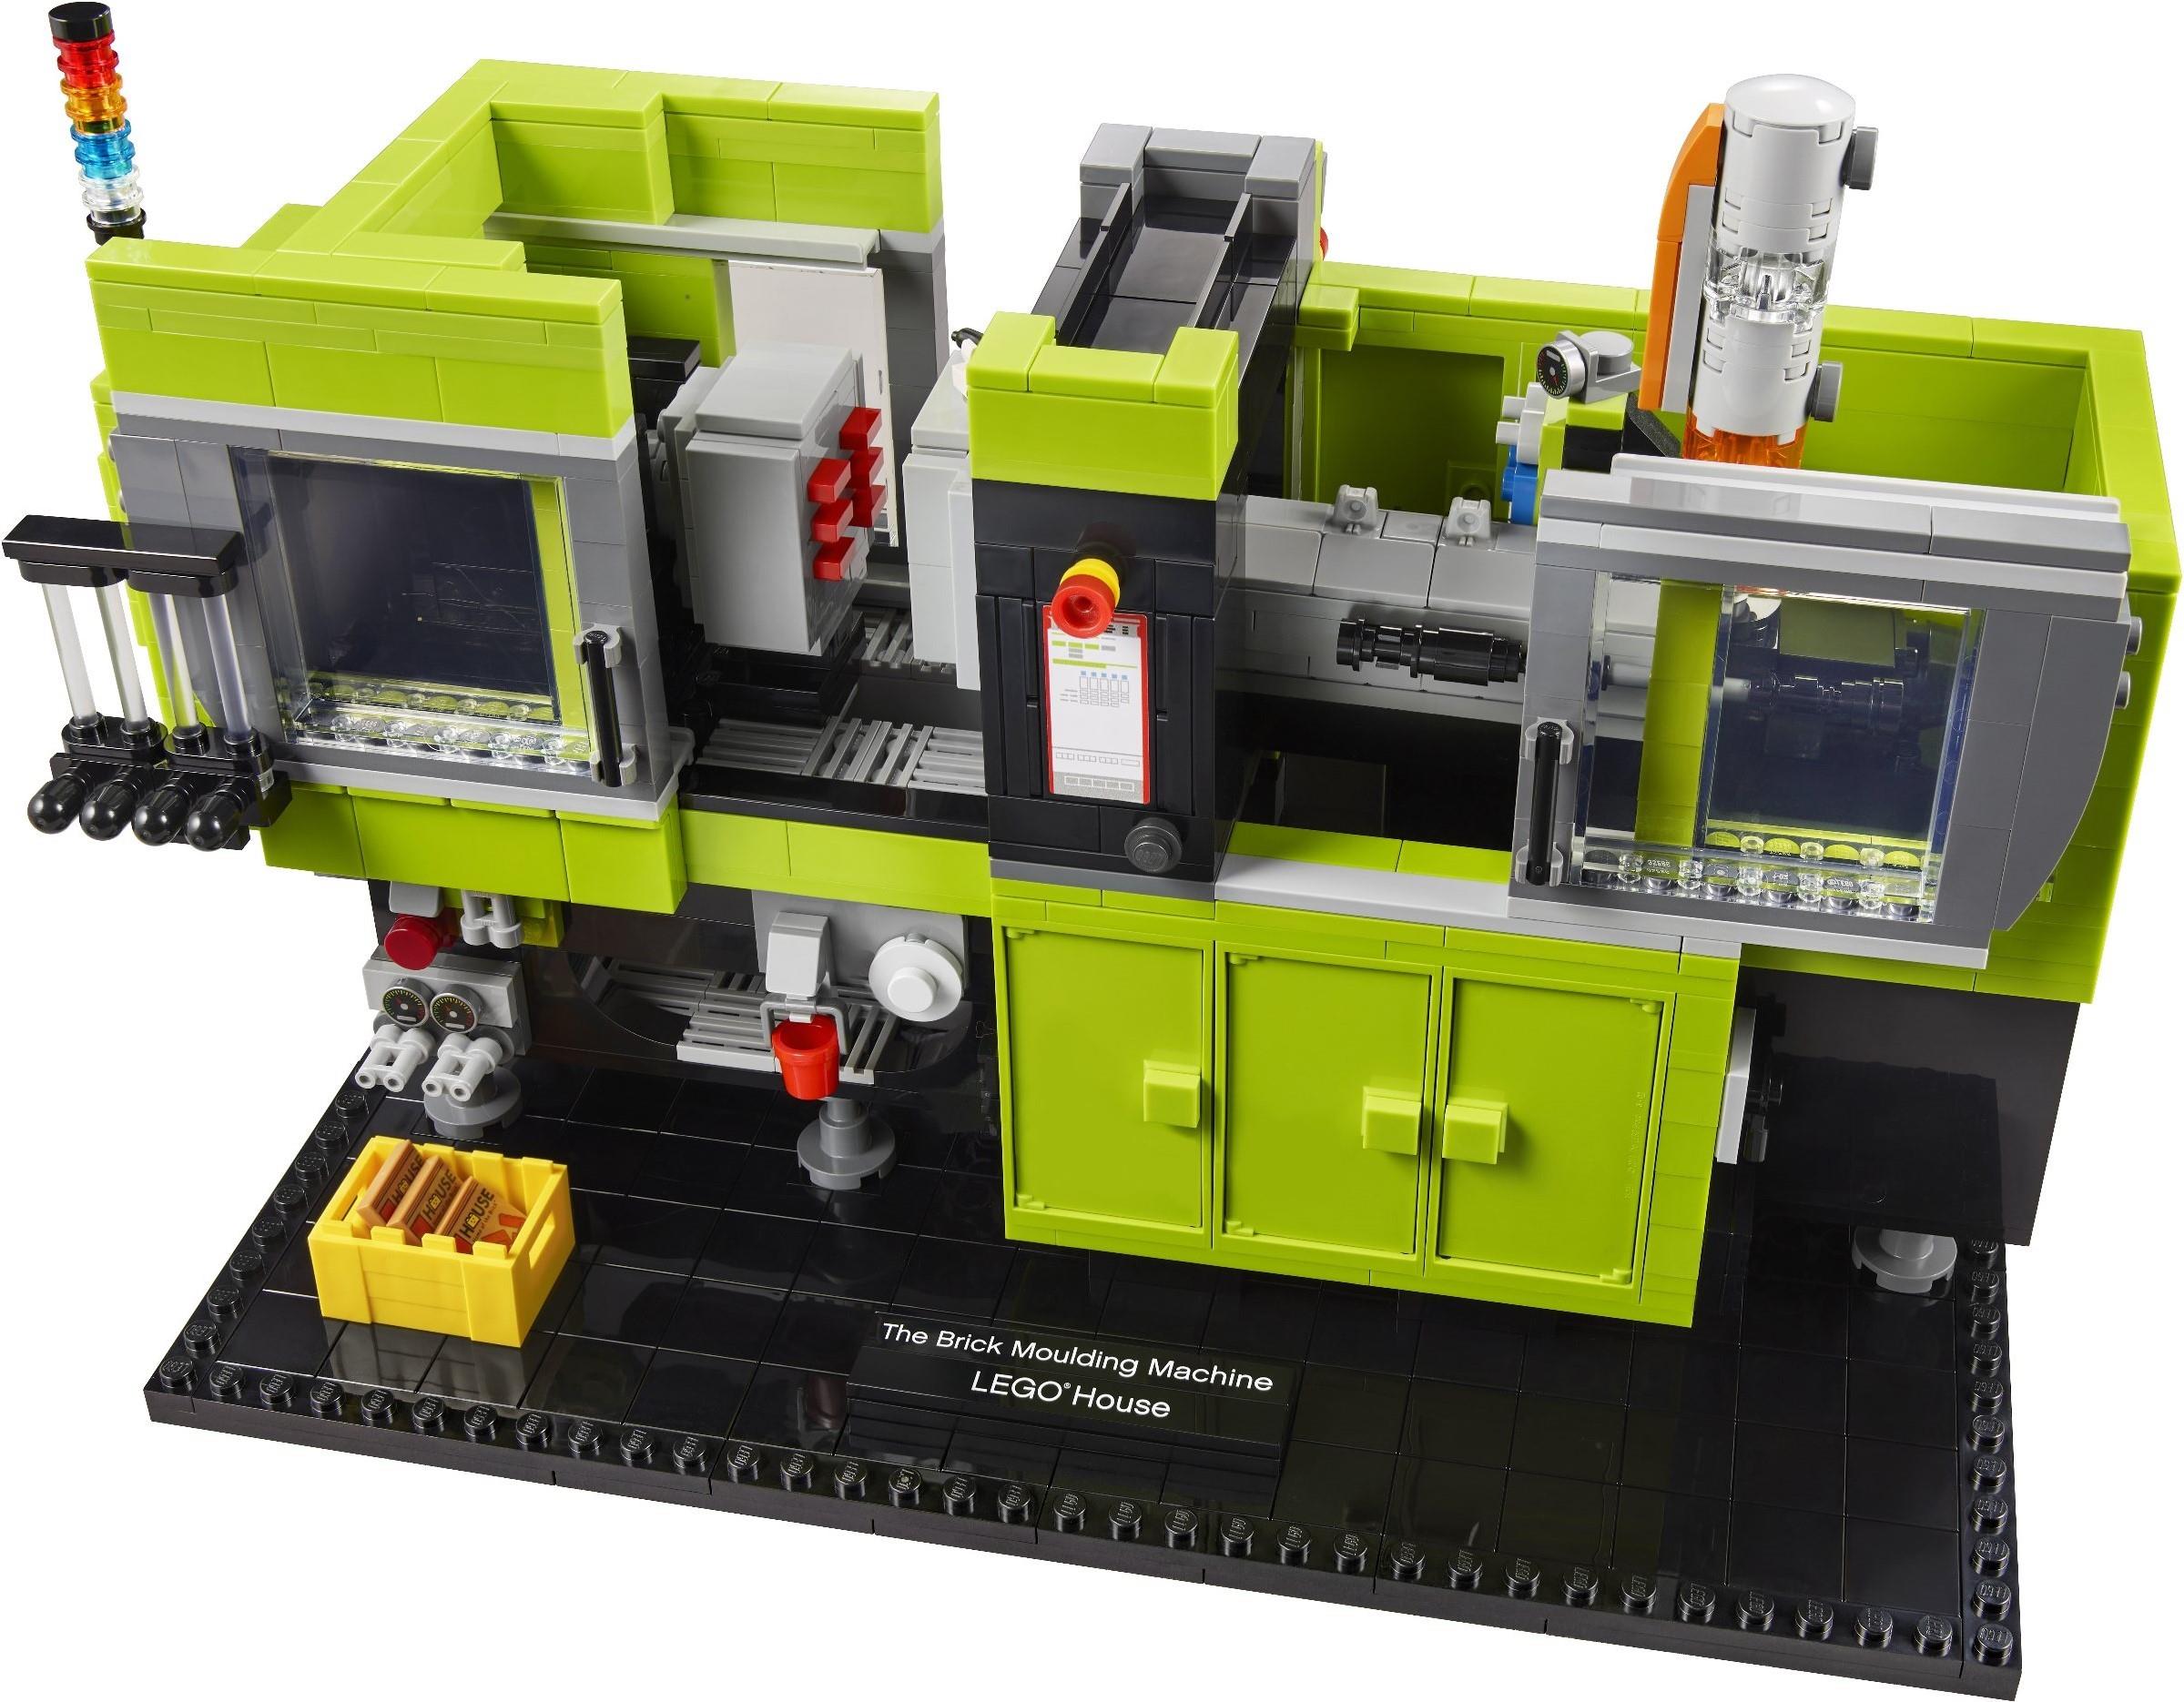 worldwide shipping 40502 the brick Moulding Machine Limited Lego House